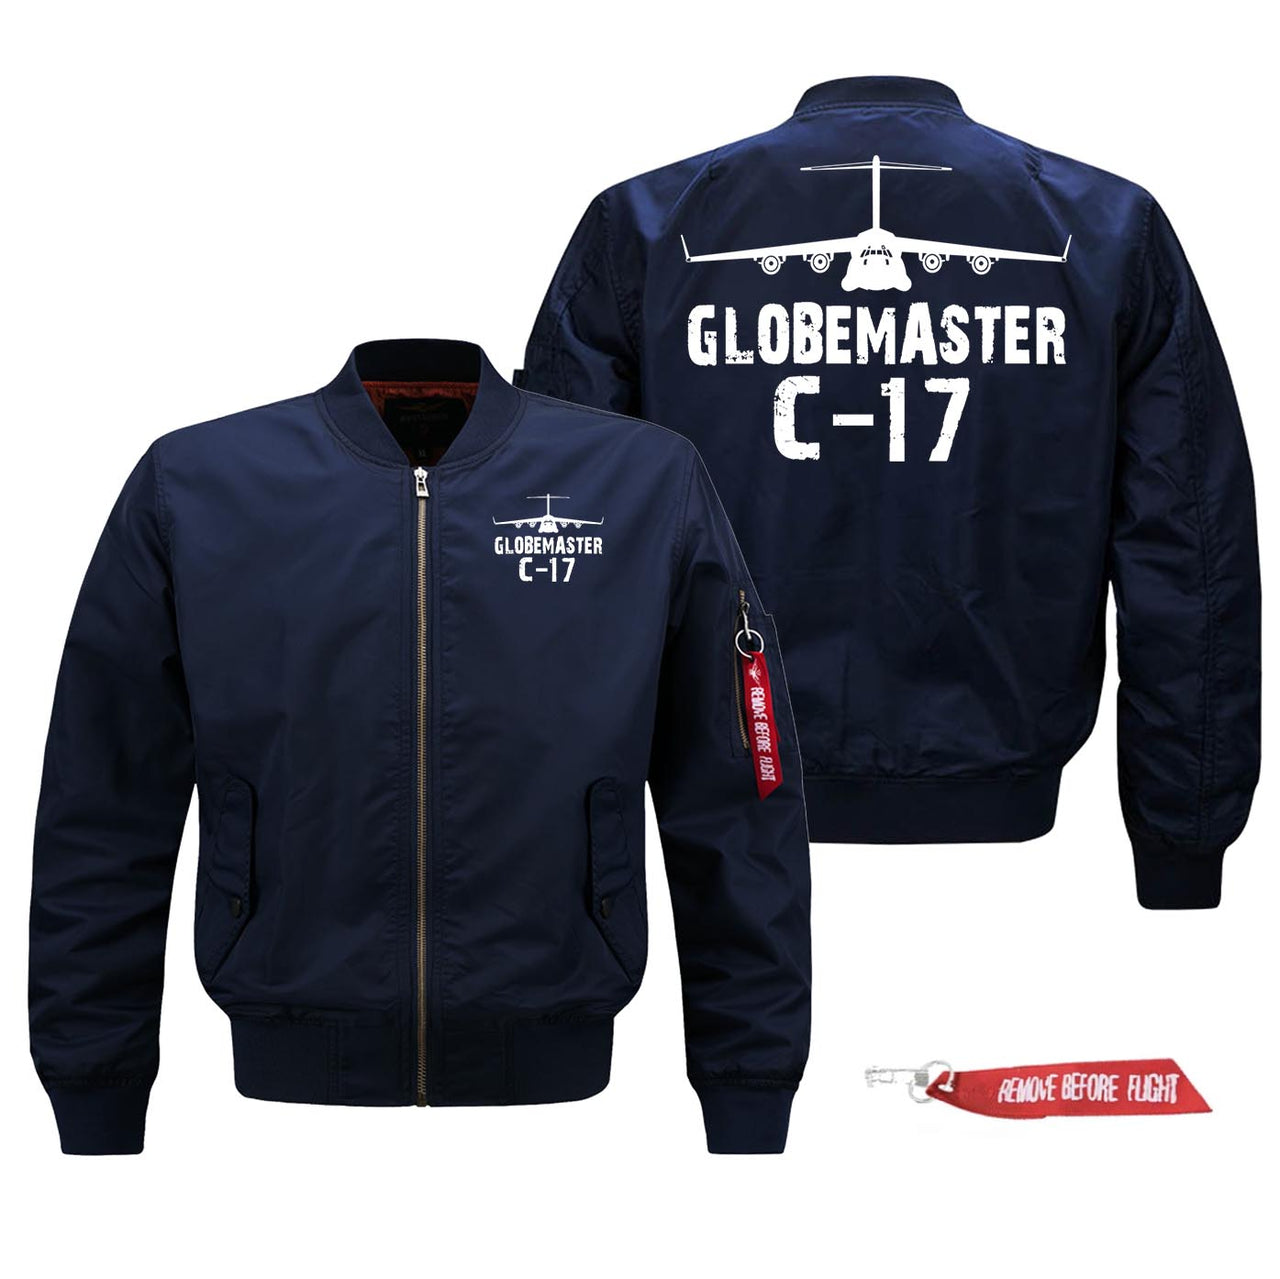 GlobeMaster C-17 Silhouette & Designed Pilot Jackets (Customizable)